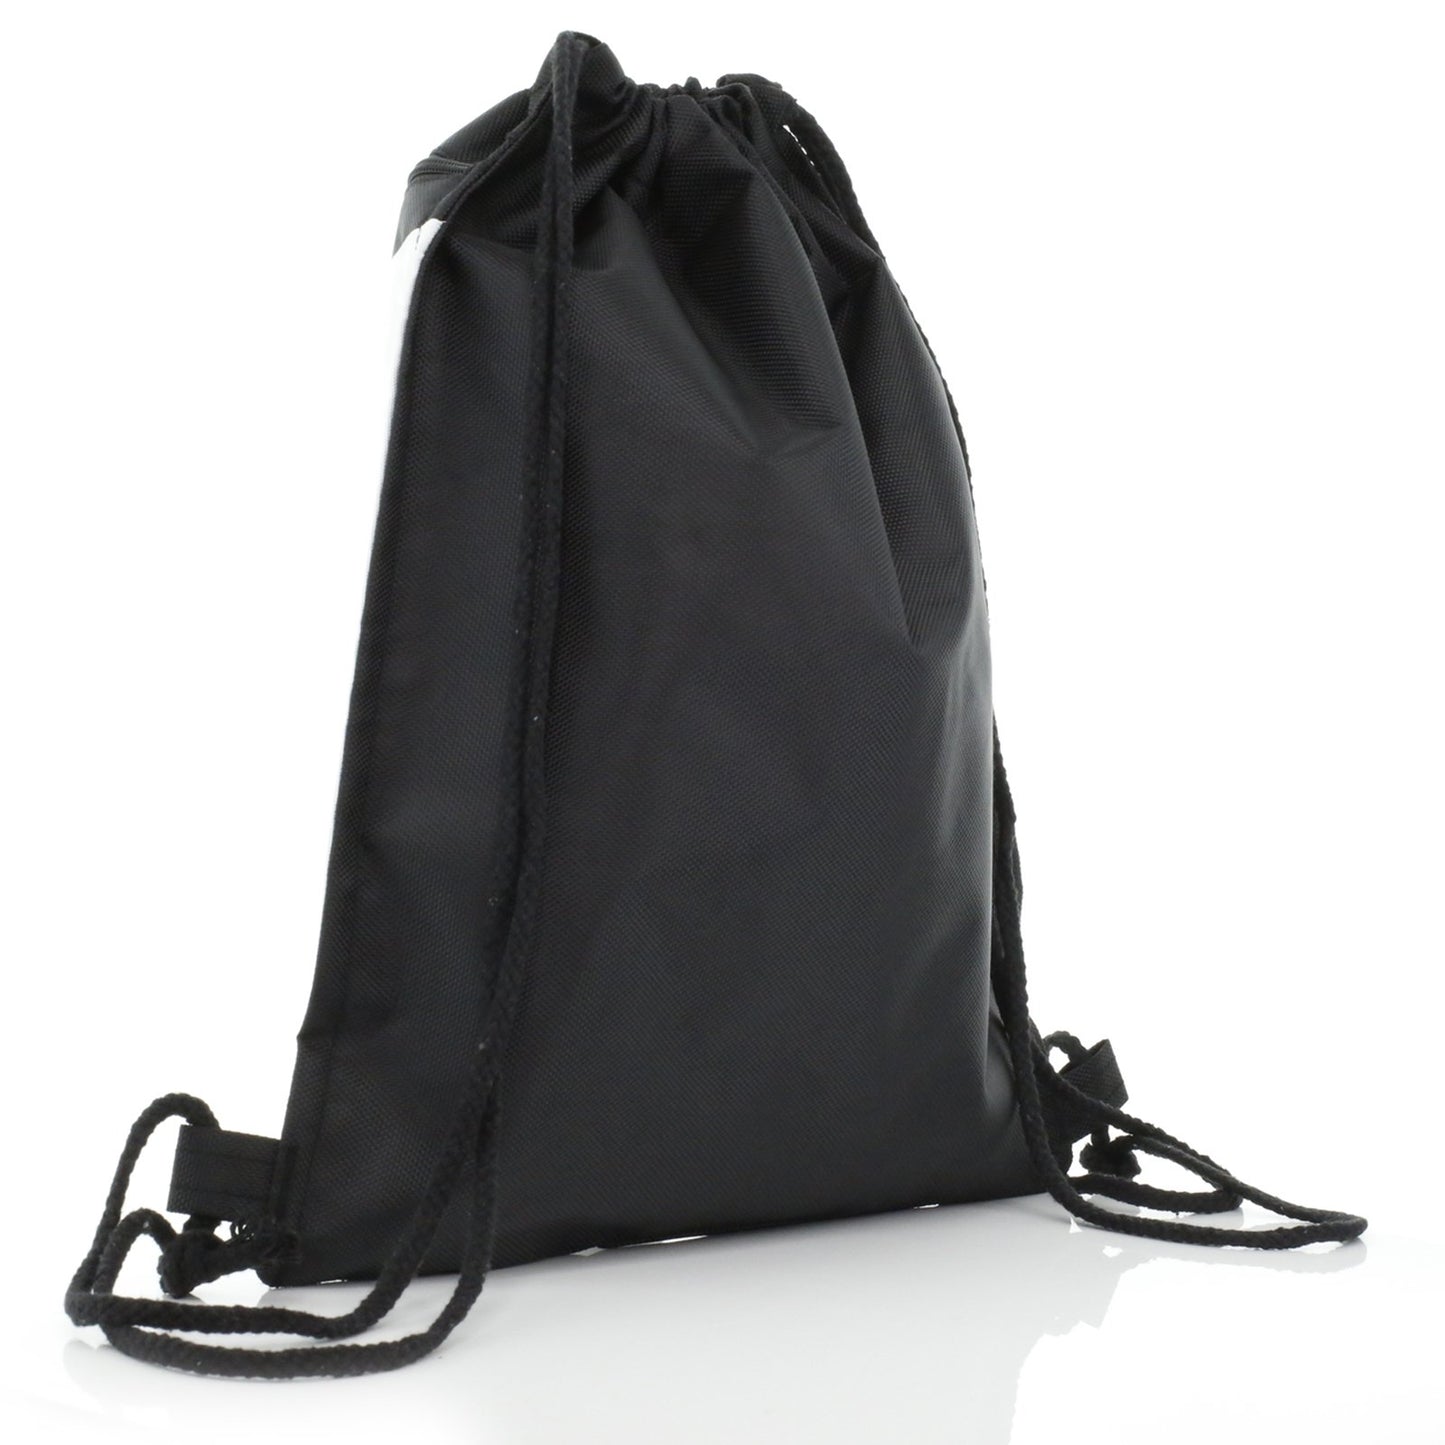 Personalised Hippo Rain Print and Name Black Drawstring Backpack